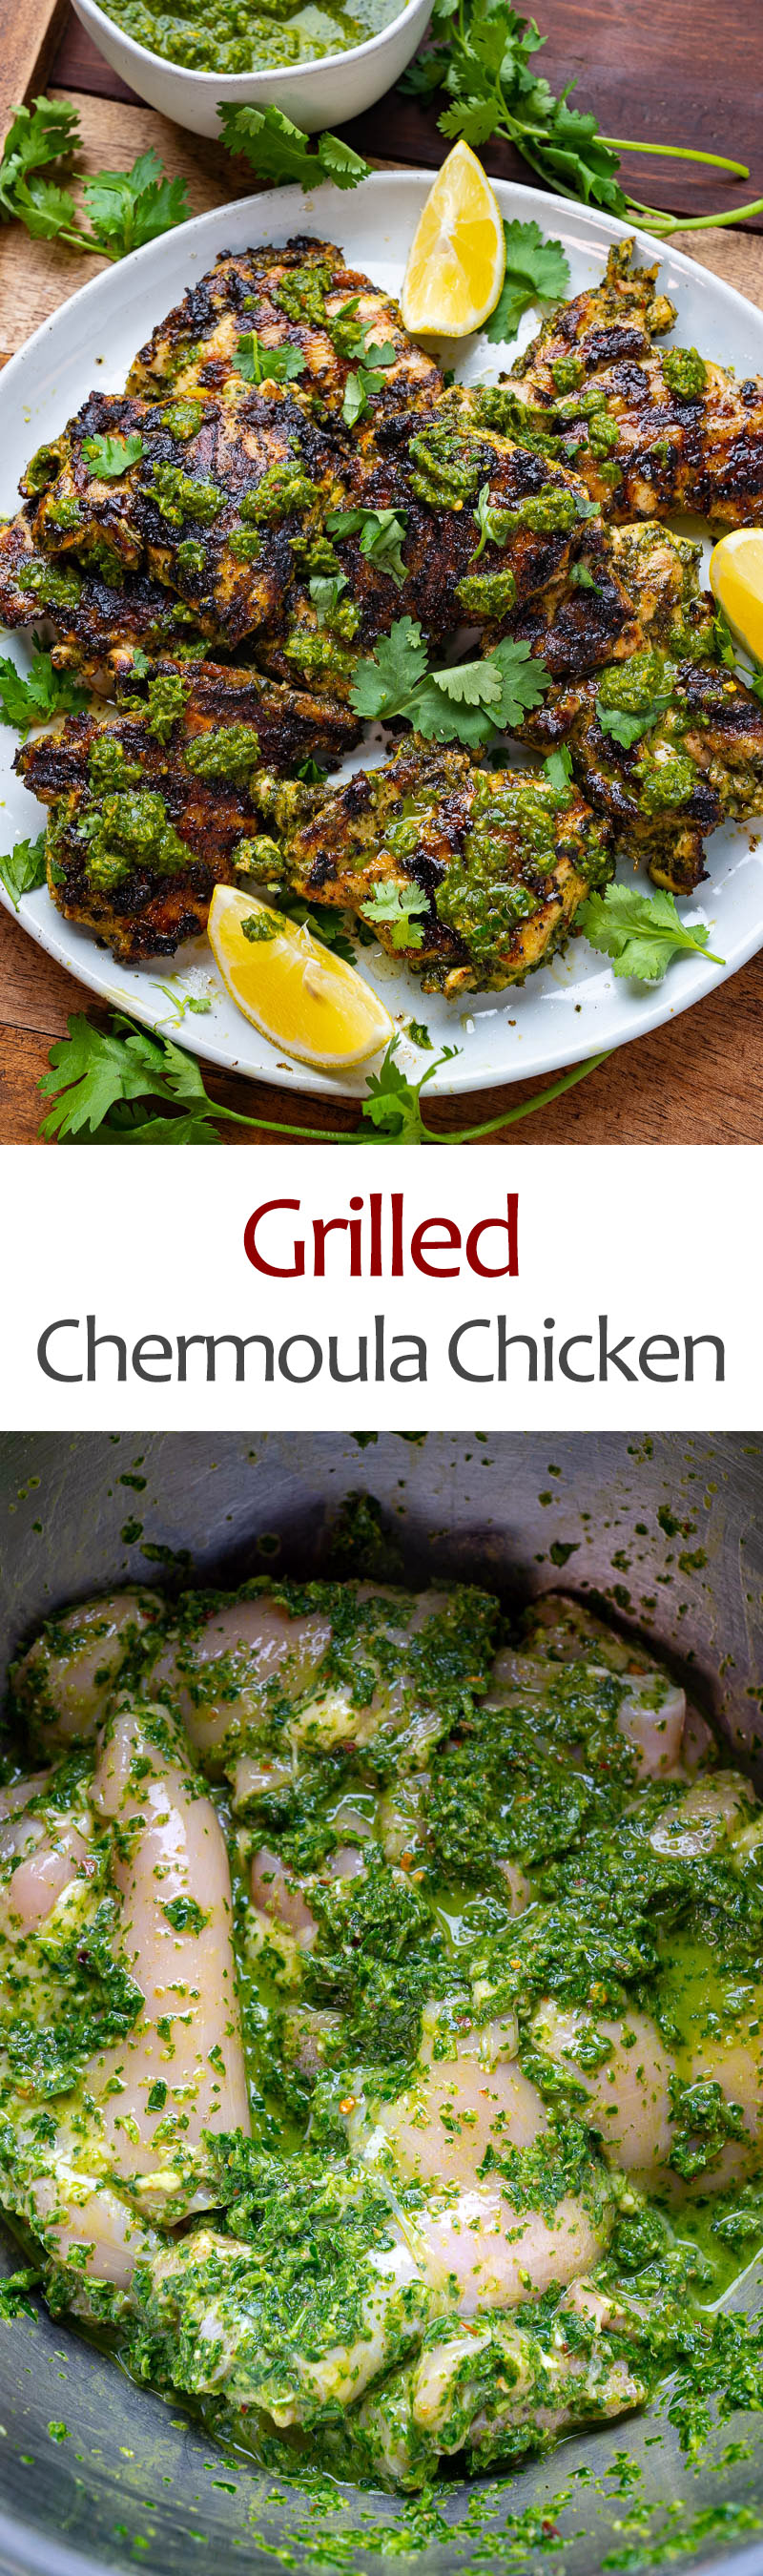 Grilled Chermoula Chicken